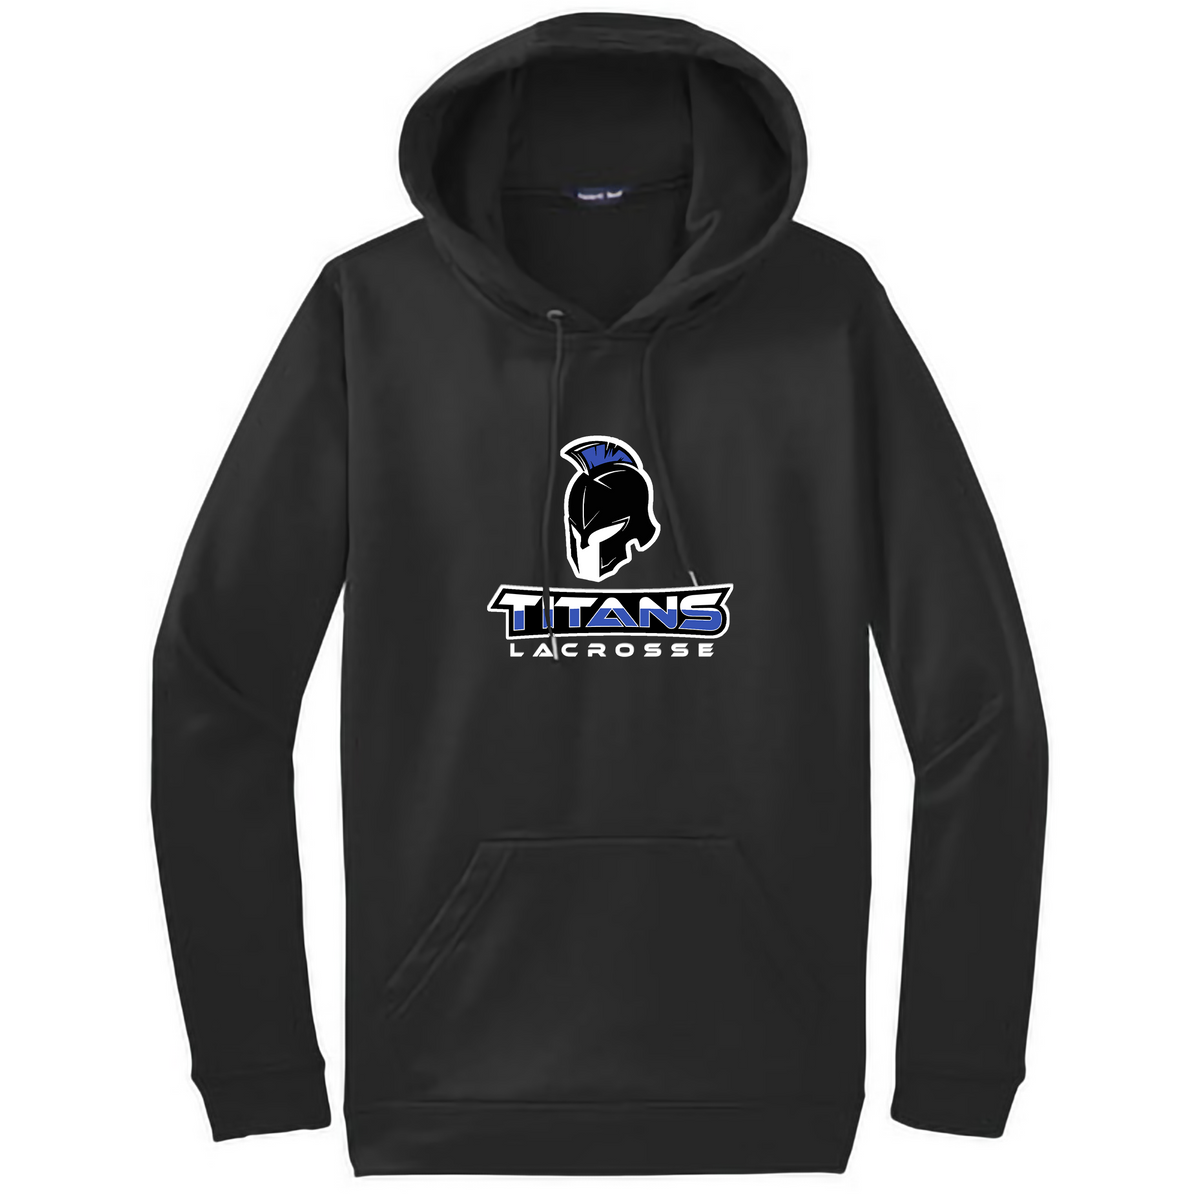 Southwest Titans Lacrosse Performance Fleece Hooded Sweatshirt